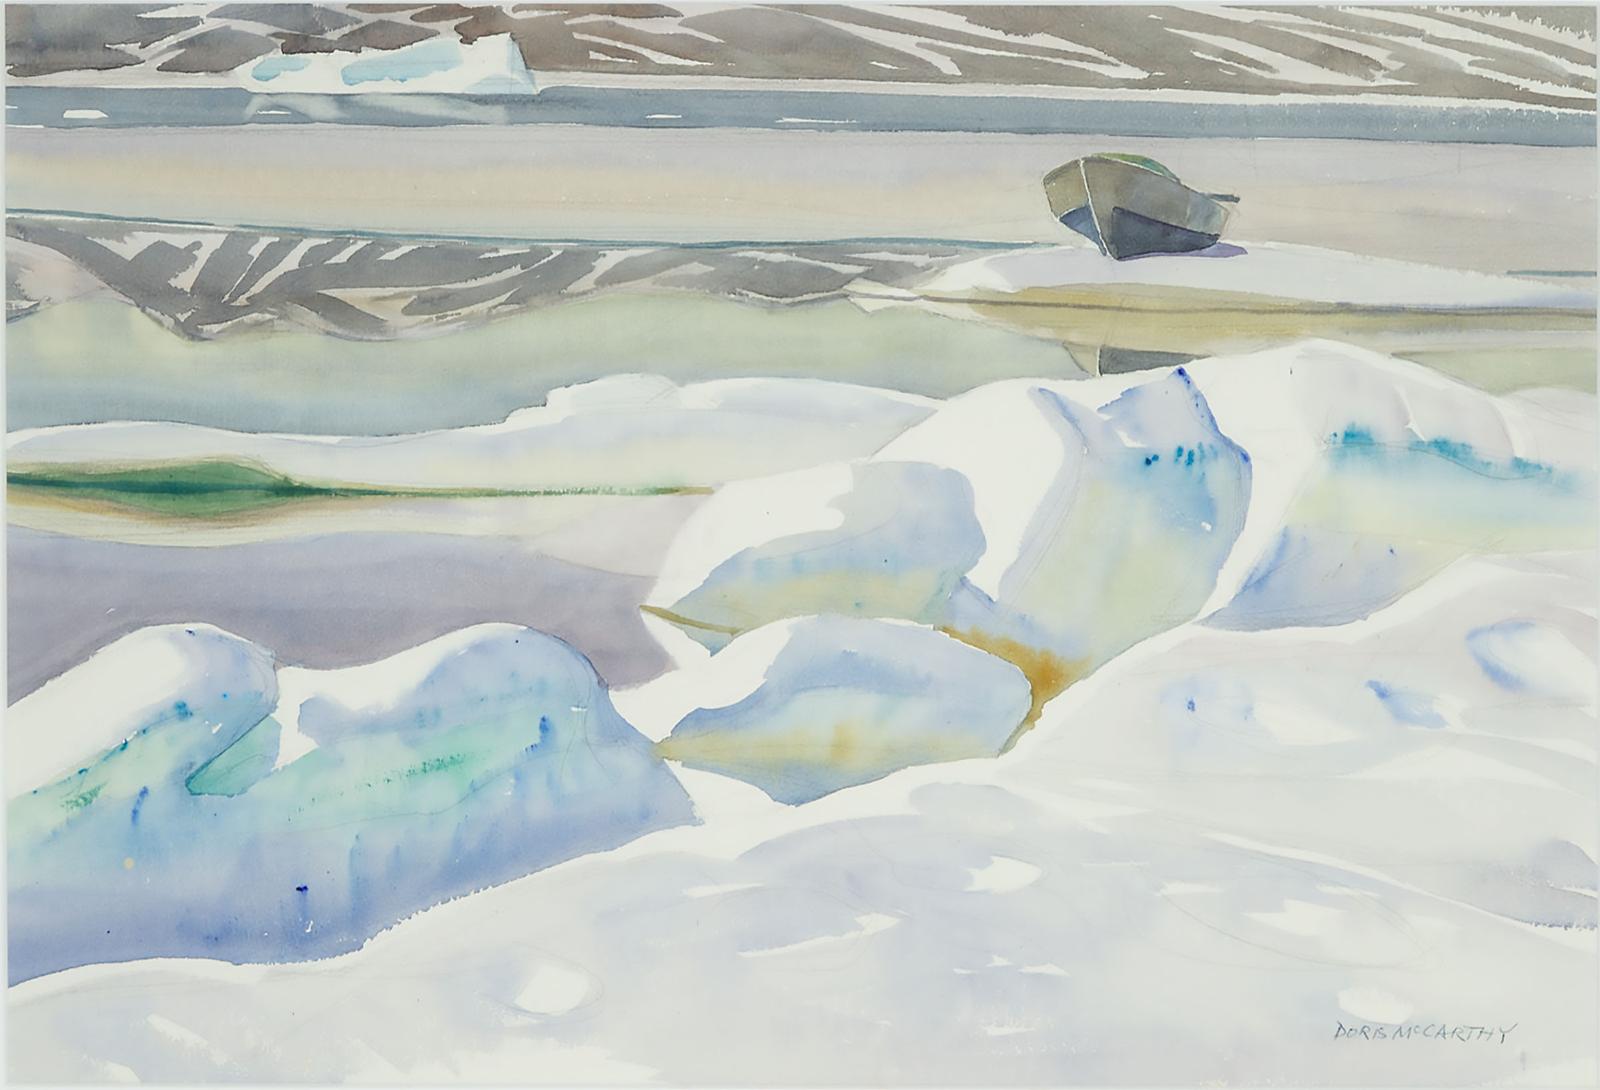 Doris Jean McCarthy (1910-2010) - Shore Shapes And The Iceberg, 1981